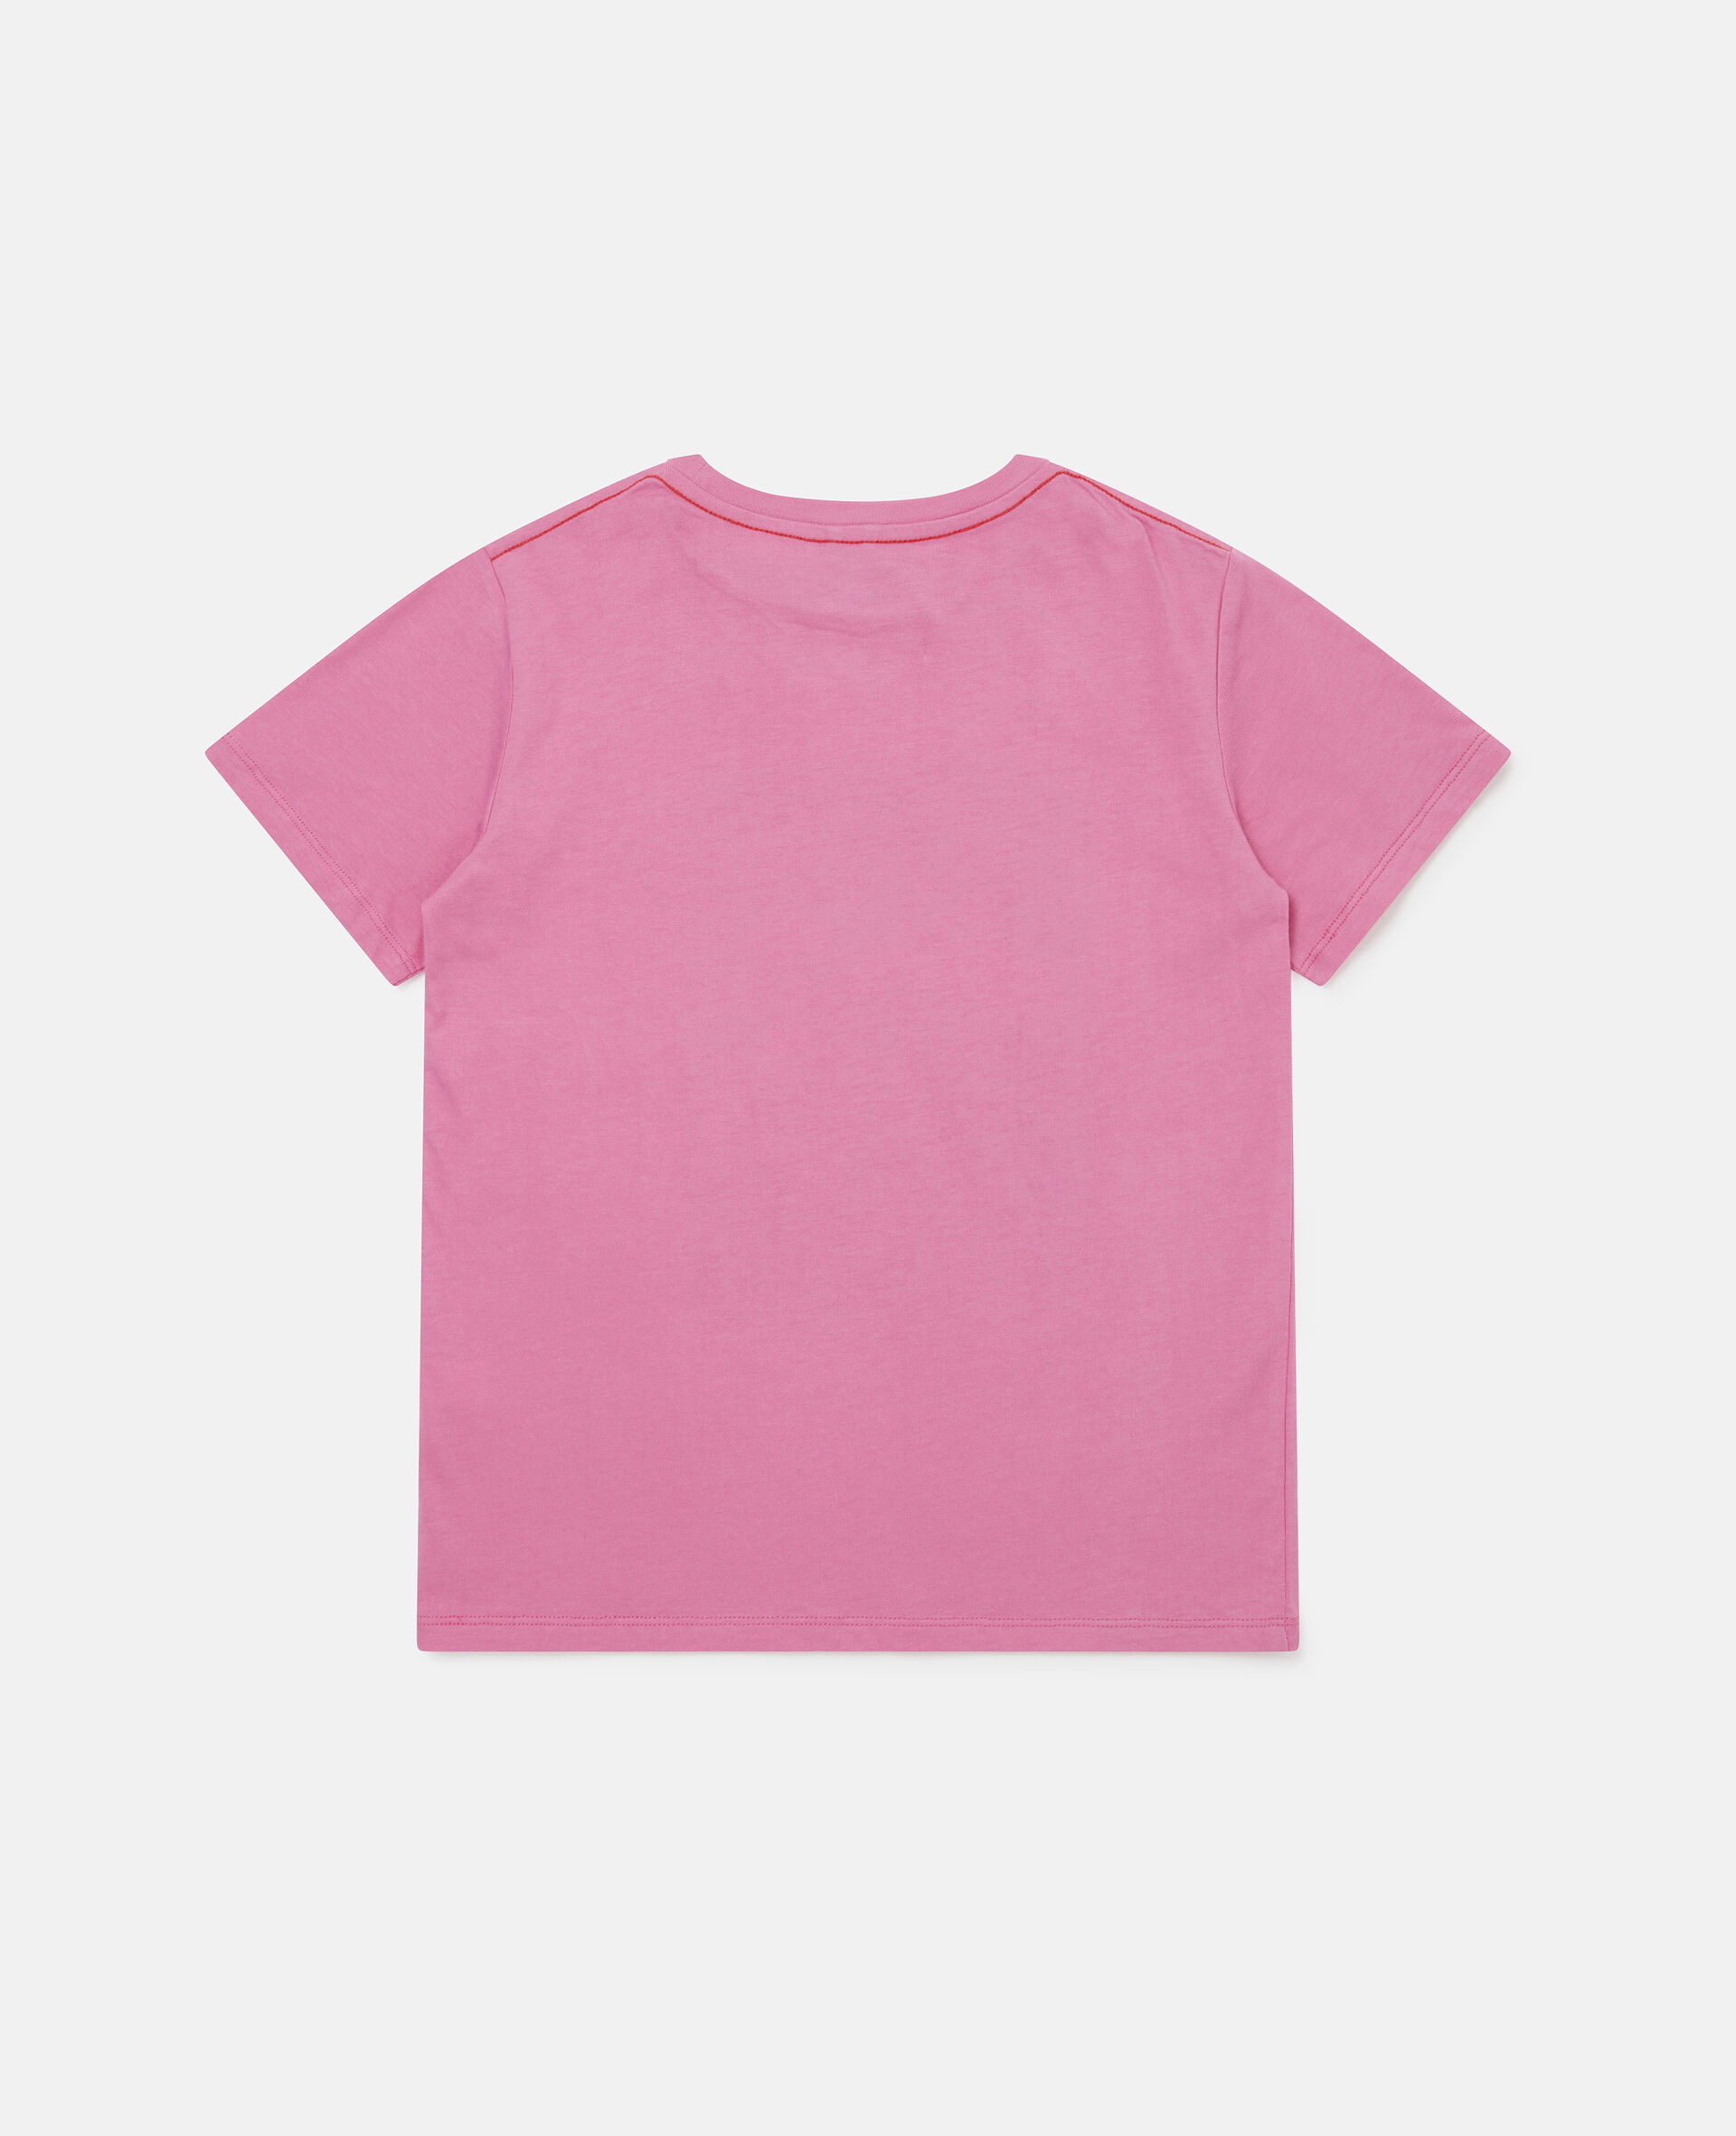 Paris Print Cotton T-Shirt -Pink-large image number 2